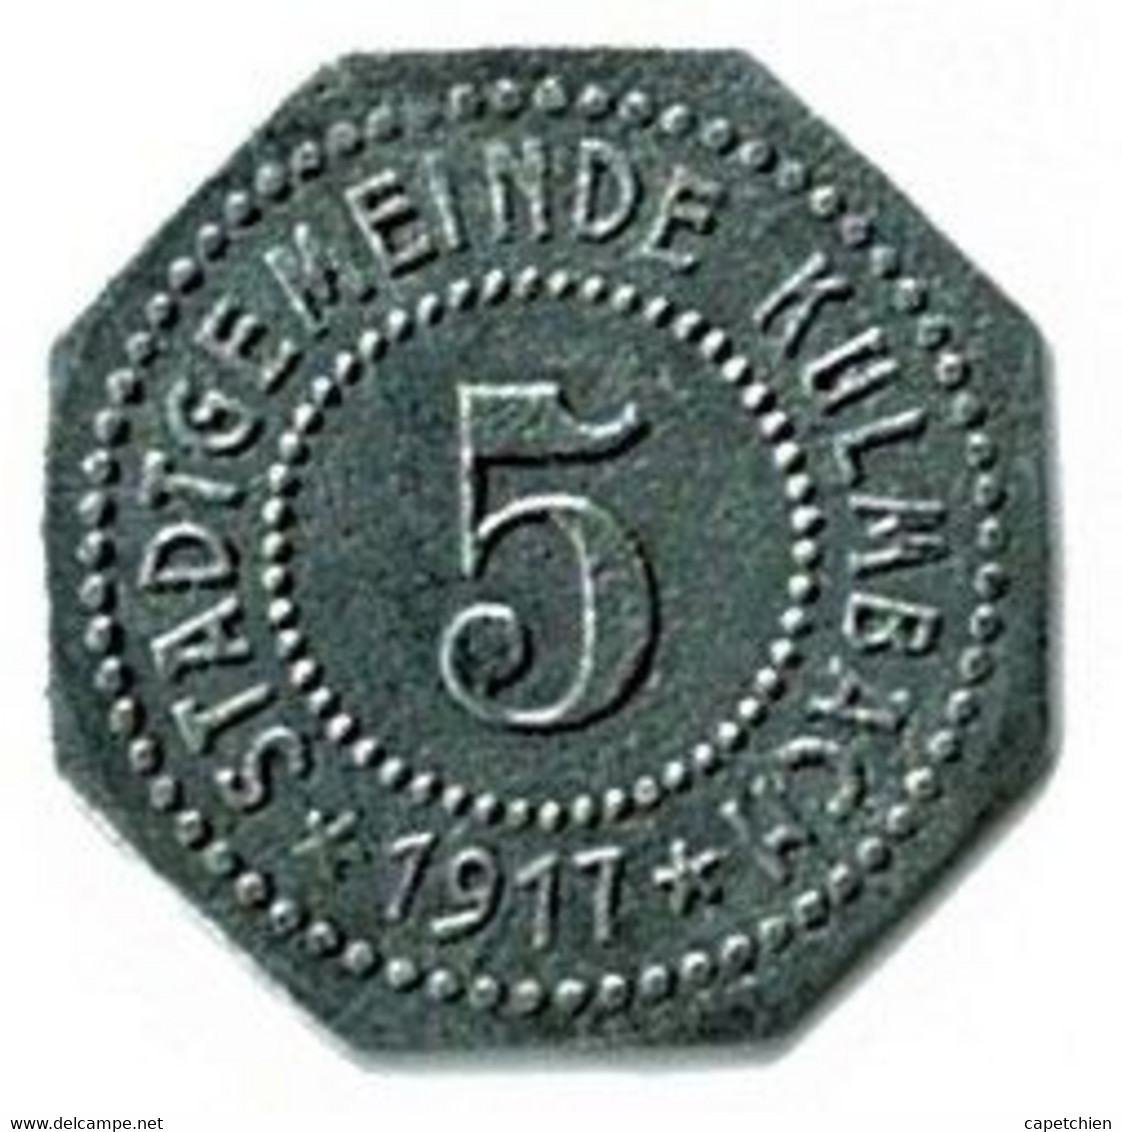 ALLEMAGNE / NECESSITE / STADTGEMEINDE KULMBACH / 5 PF./ 1917  / ZINC / 19.2  Mm / ETAT SUP / 264.1 - Monetary/Of Necessity